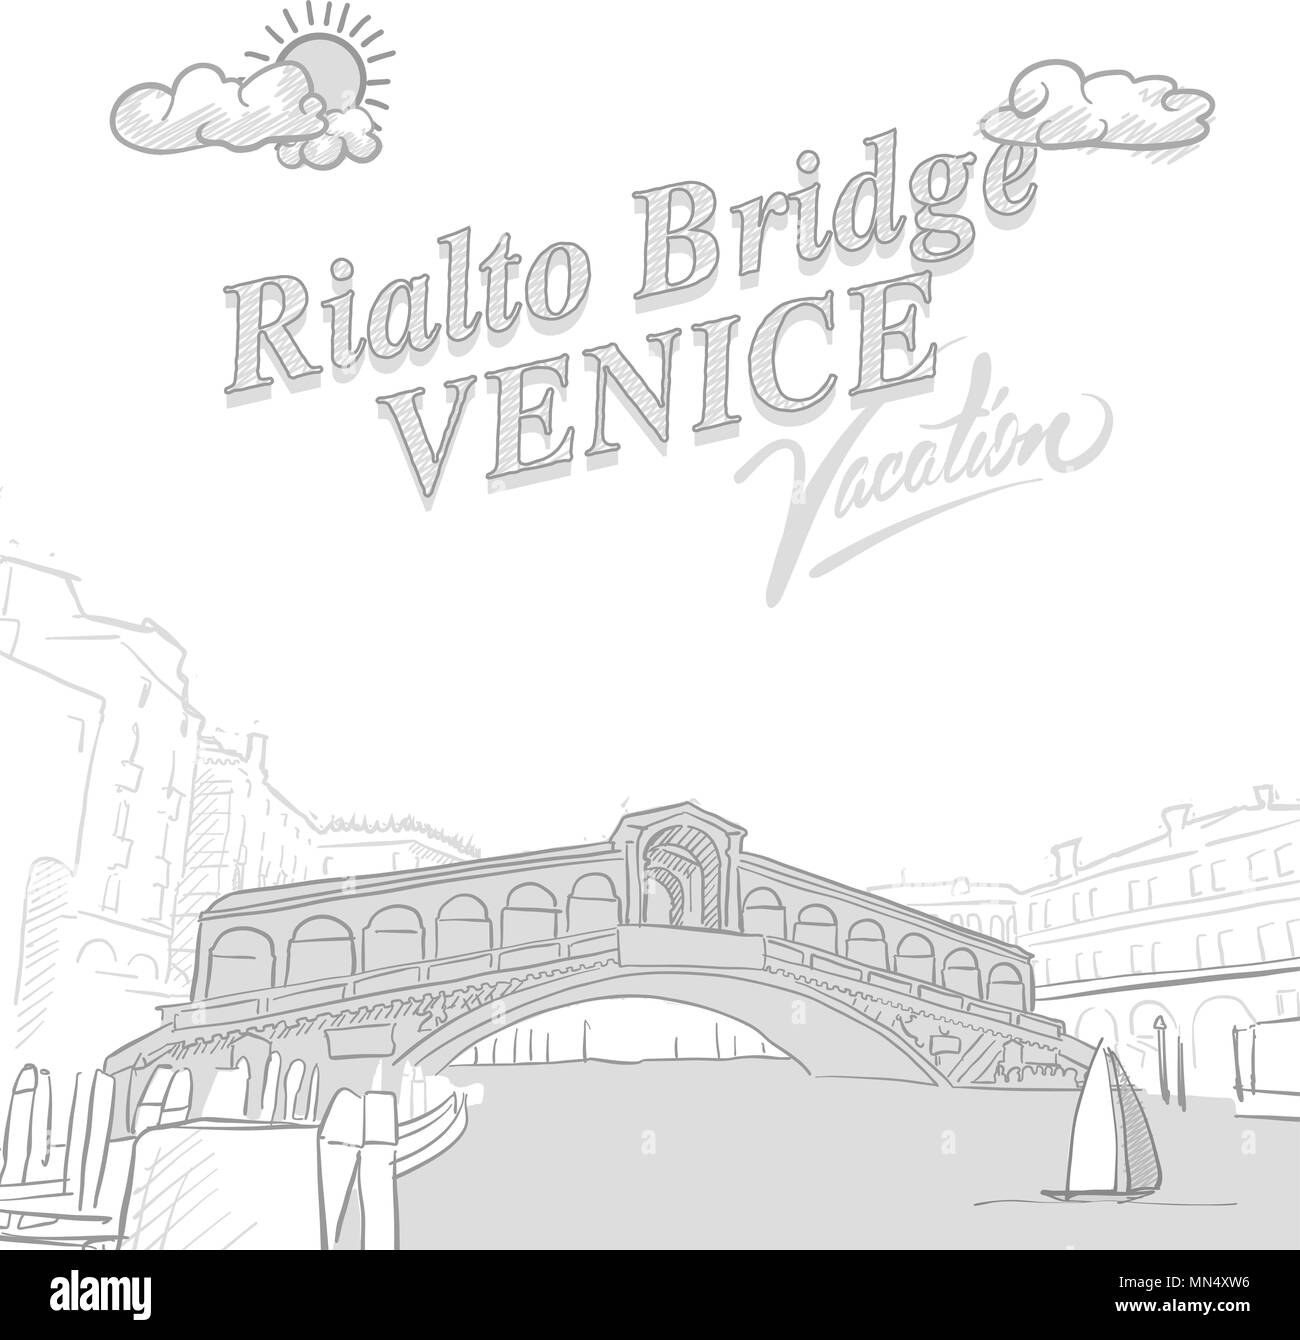 Rialto bridge travel marketing, set of hand drawn a vector drawings. Stock Vector